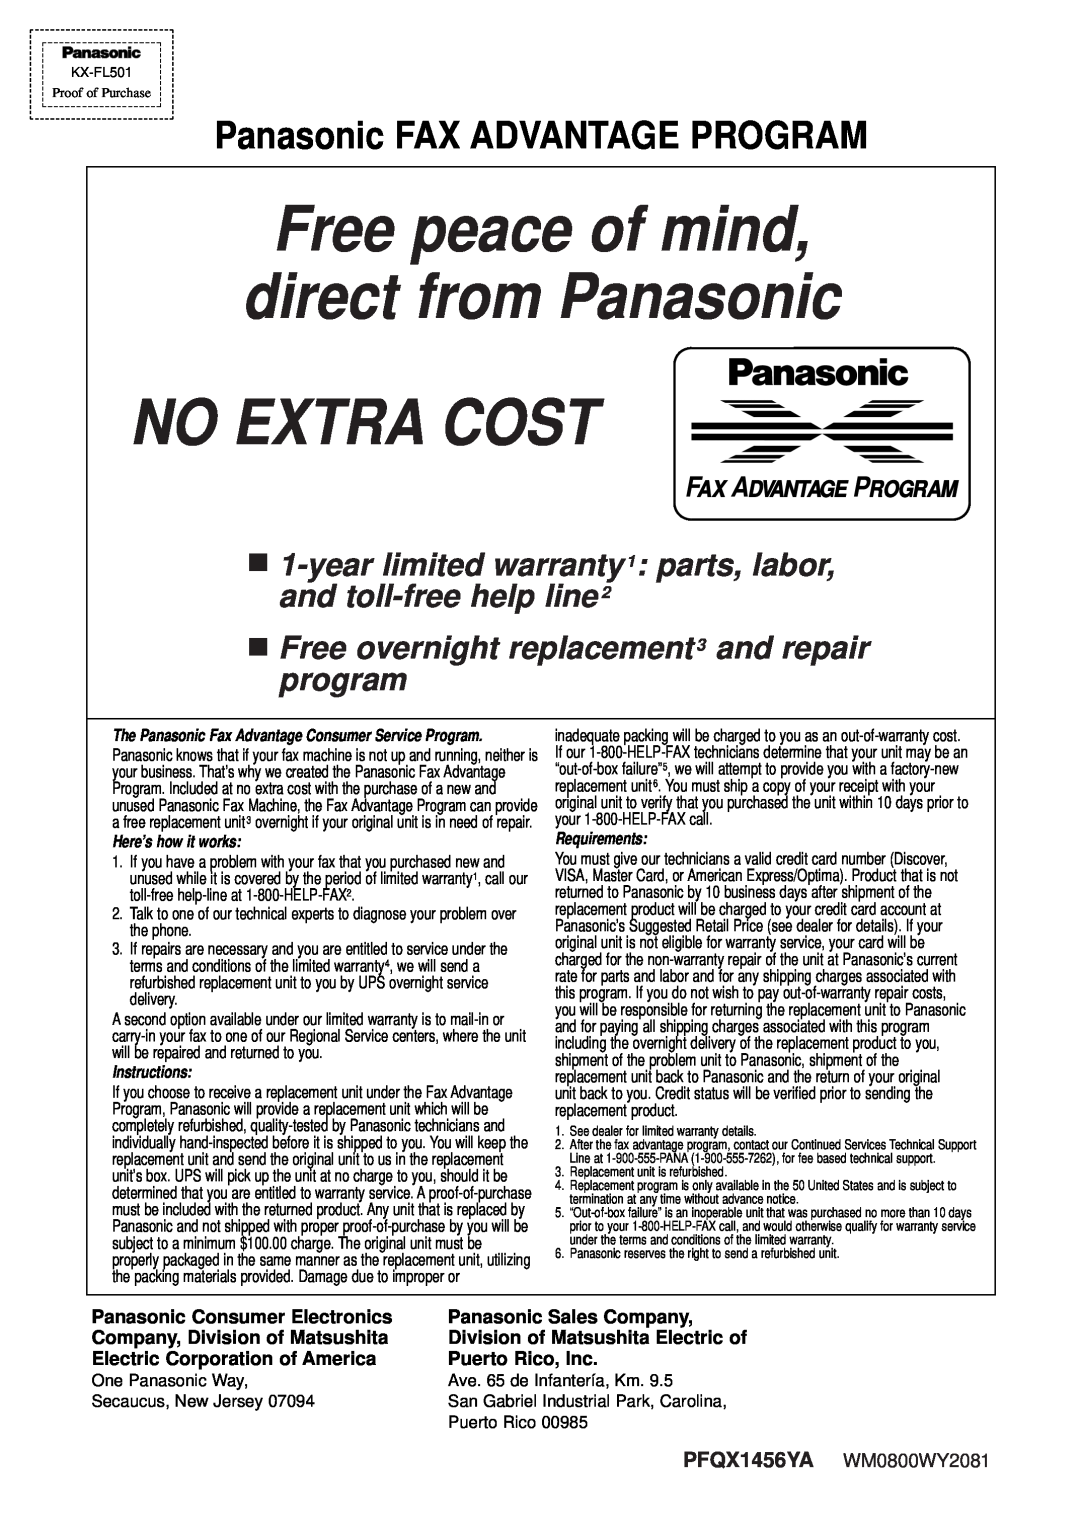 Panasonic KX-FL501 Panasonic FAX ADVANTAGE PROGRAM, Free peace of mind direct from Panasonic NO EXTRA COST, Instructions 